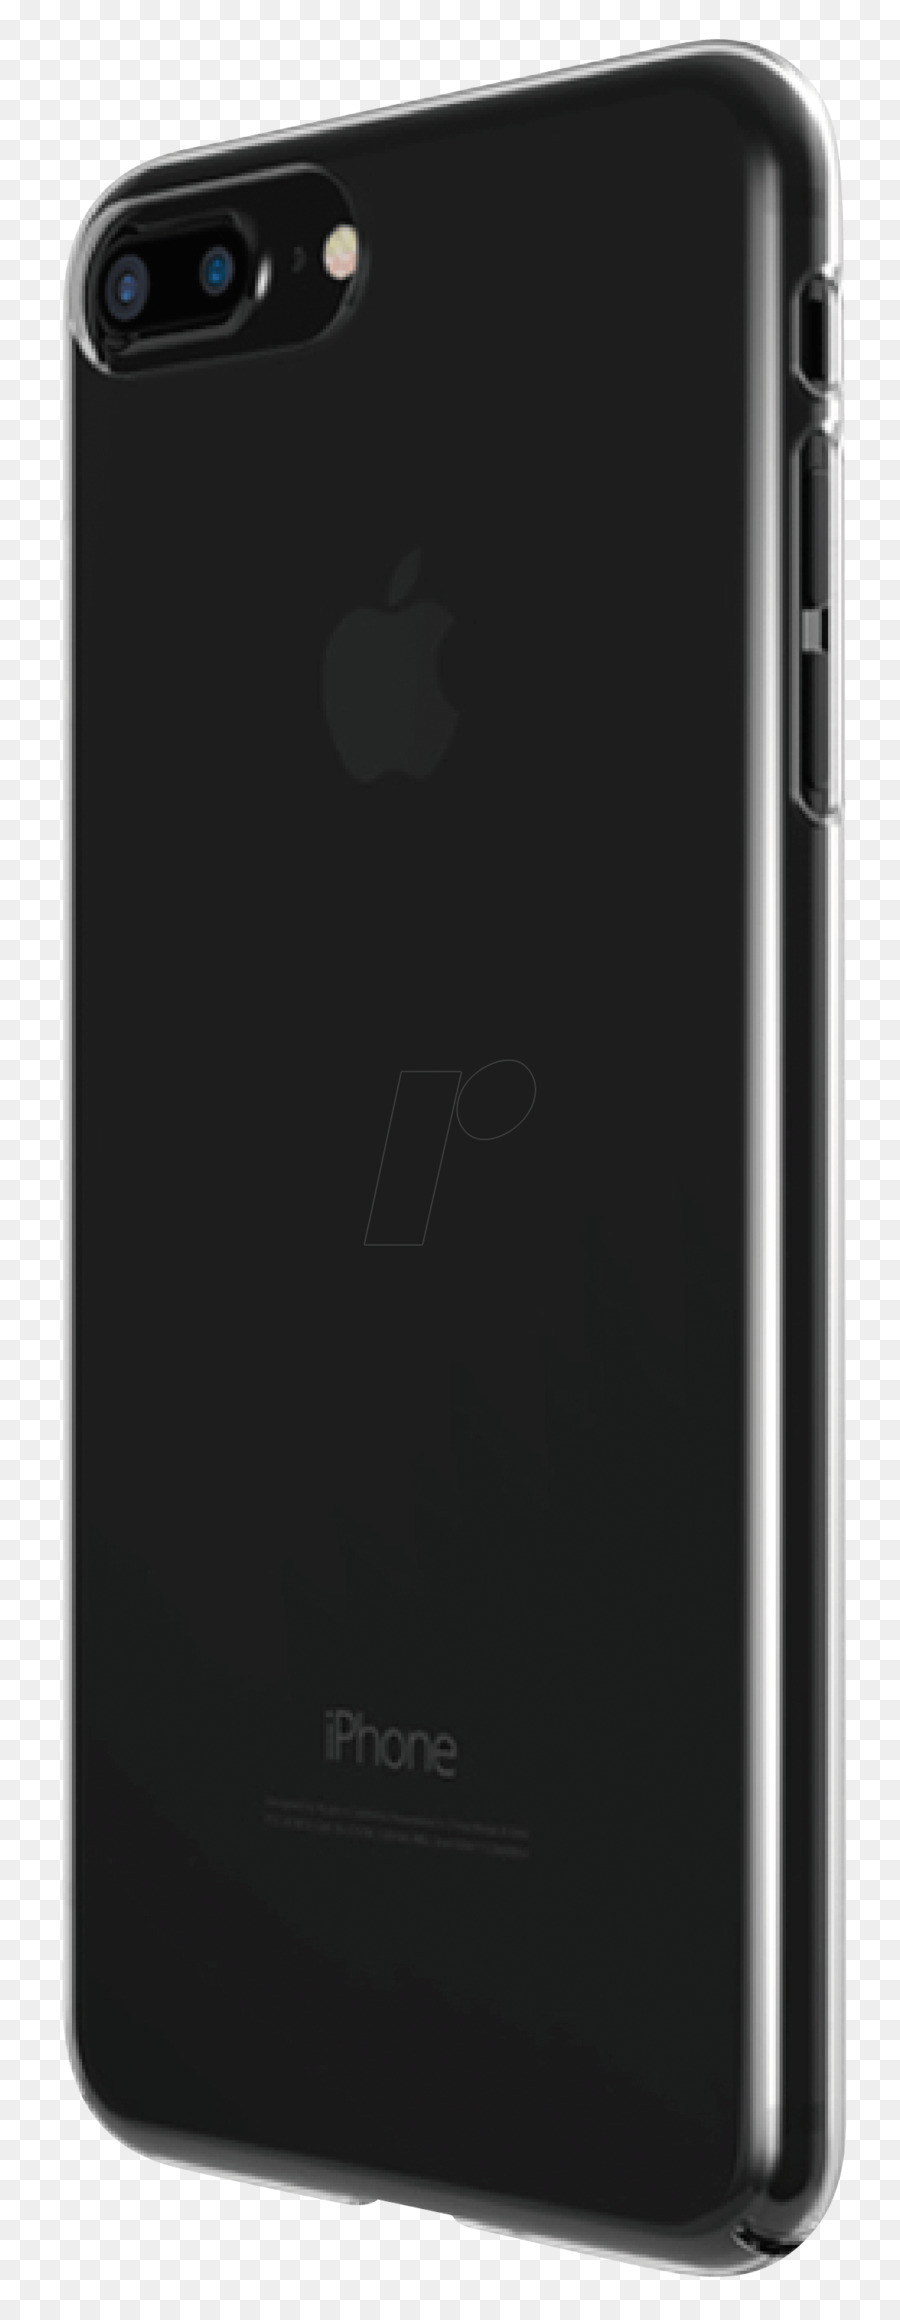 Huawei P8 lite (2017) Huawei P9 Telefon 华为 Luftreiniger - Jb